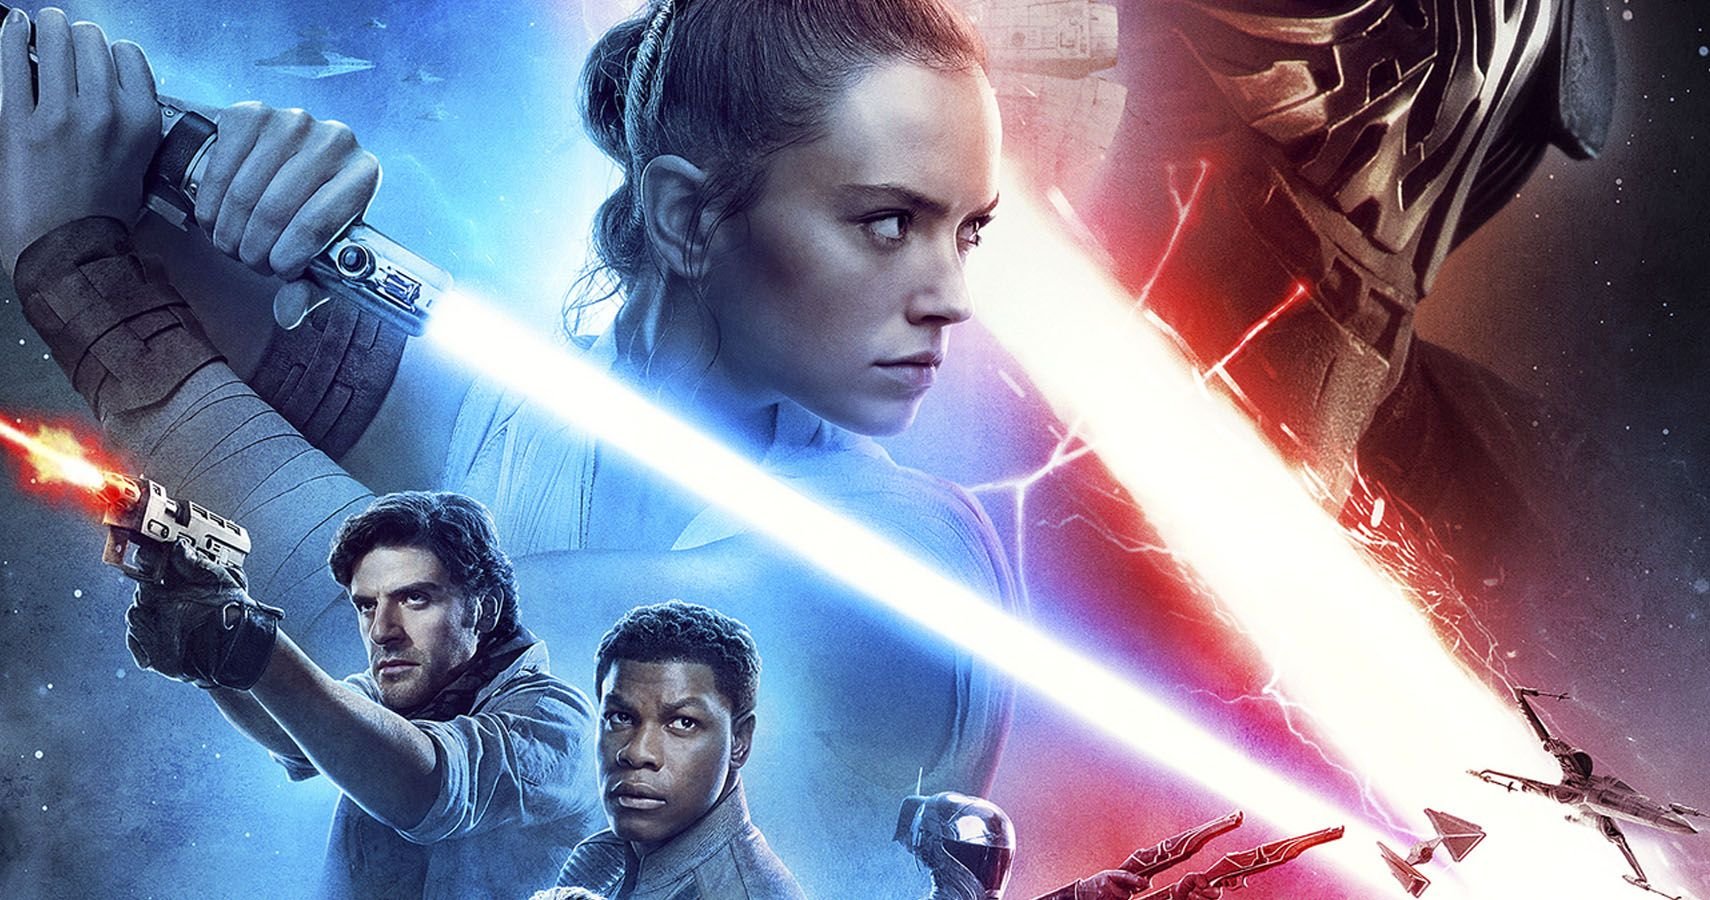 Disney CEO Bob Iger Says "Star Wars" Series Will Go On Hiatus